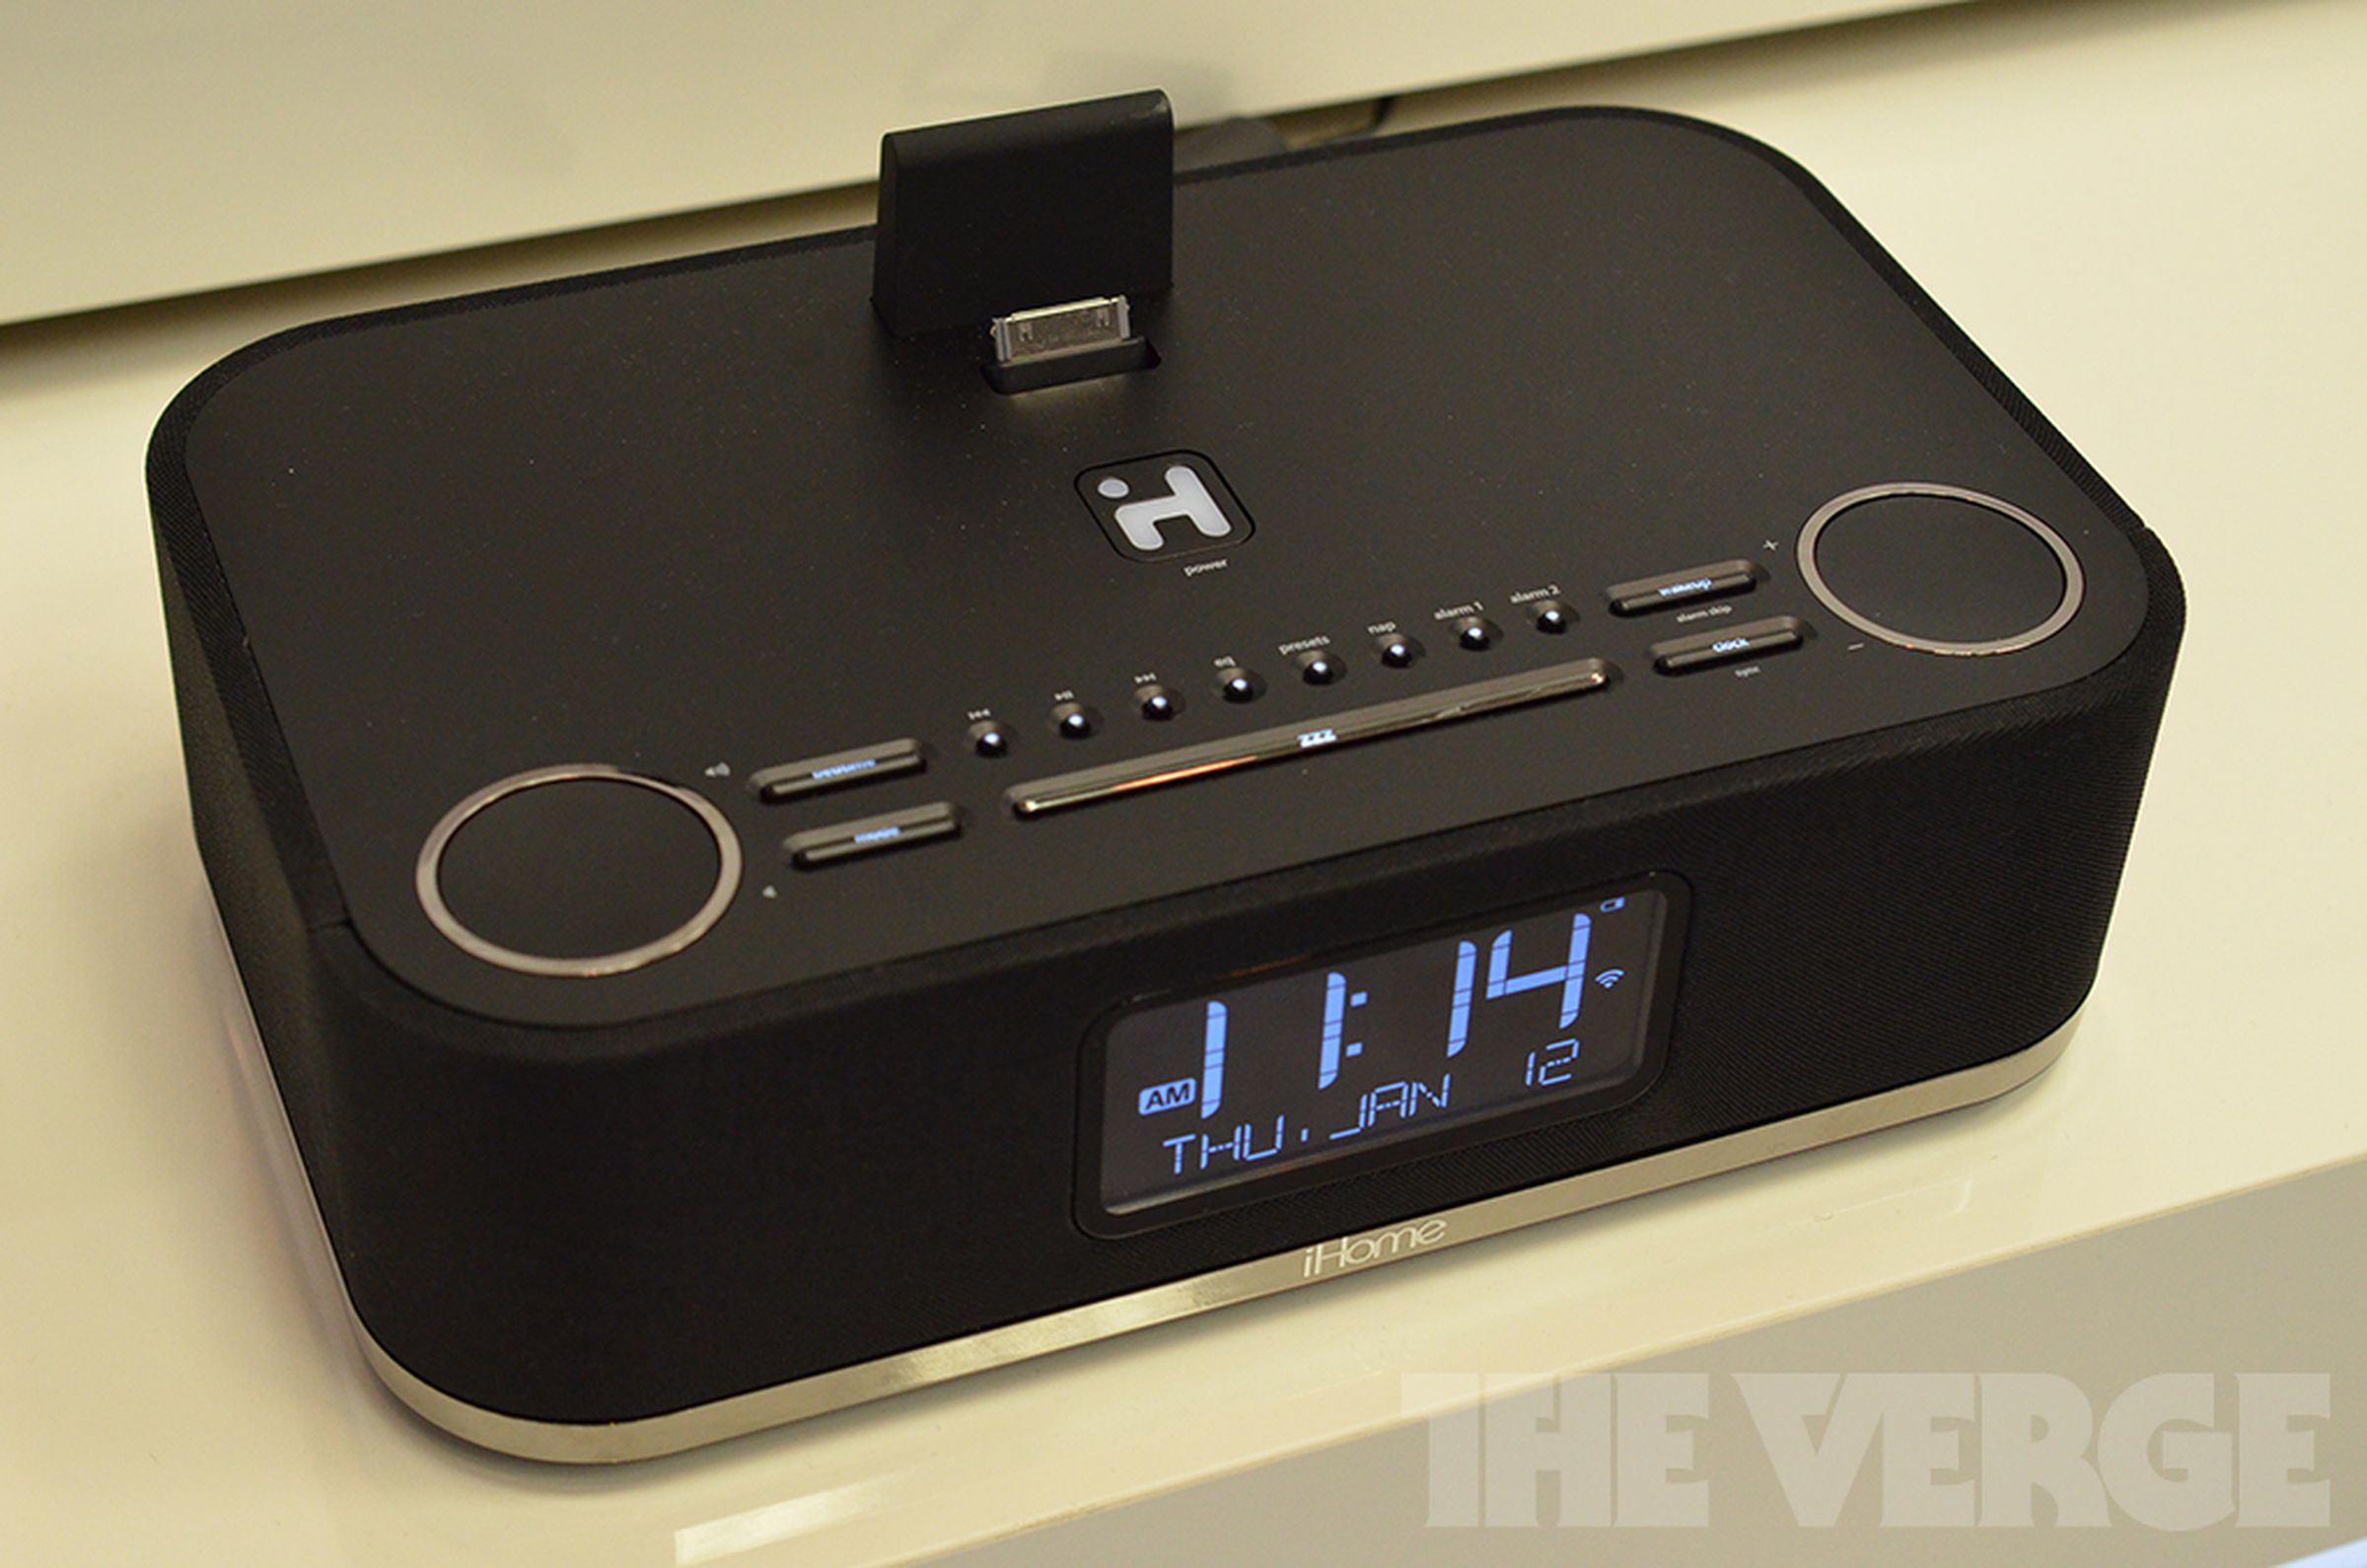 iHome iW4 AirPlay alarm clock hands-on photos